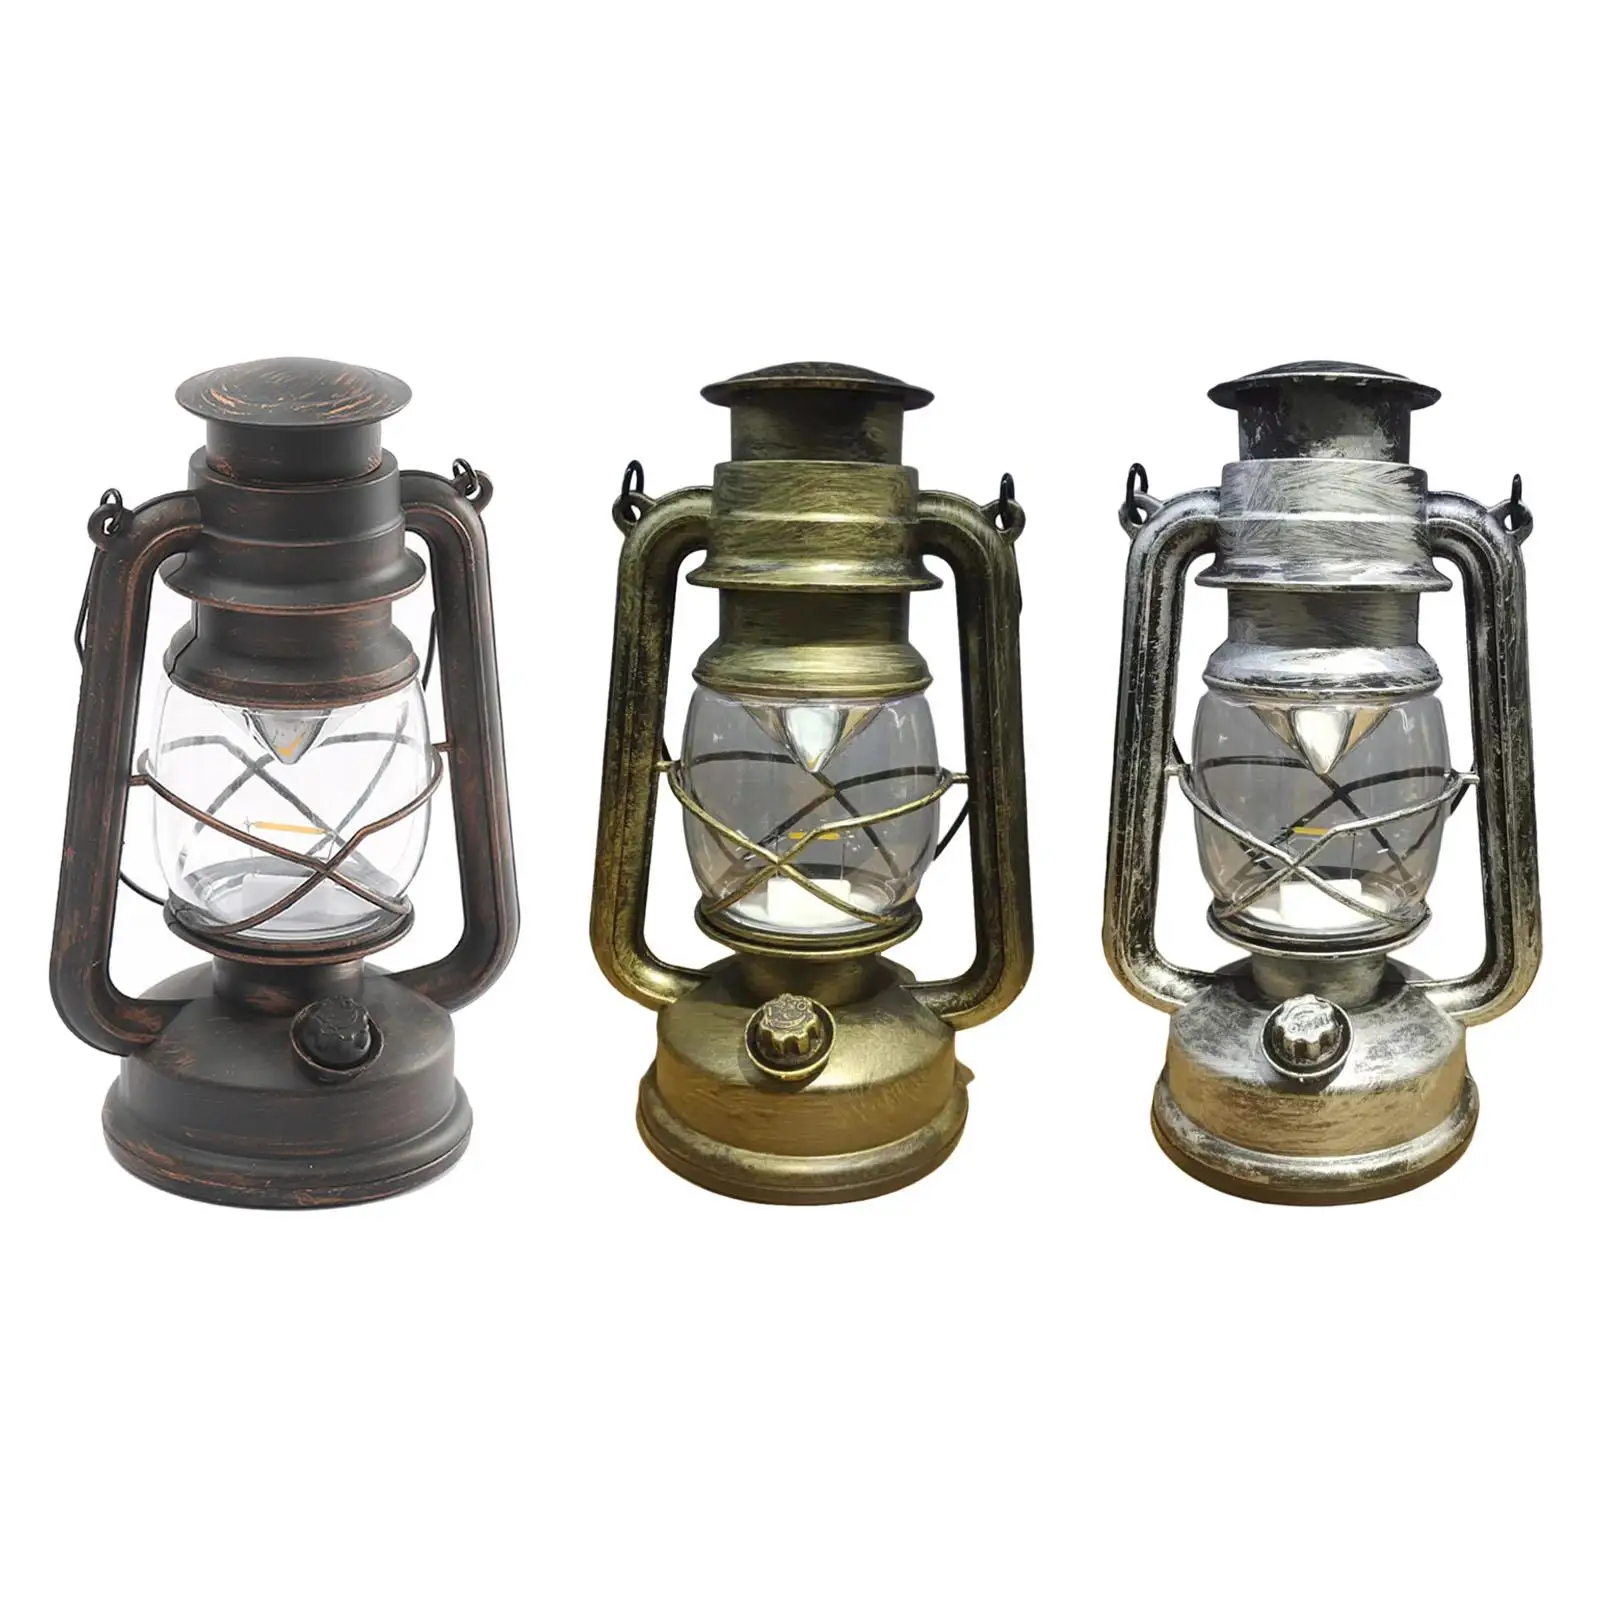 Rustic Oil Lantern Lamp Portable Hanging Lamp Night Light for BBQ Decoration